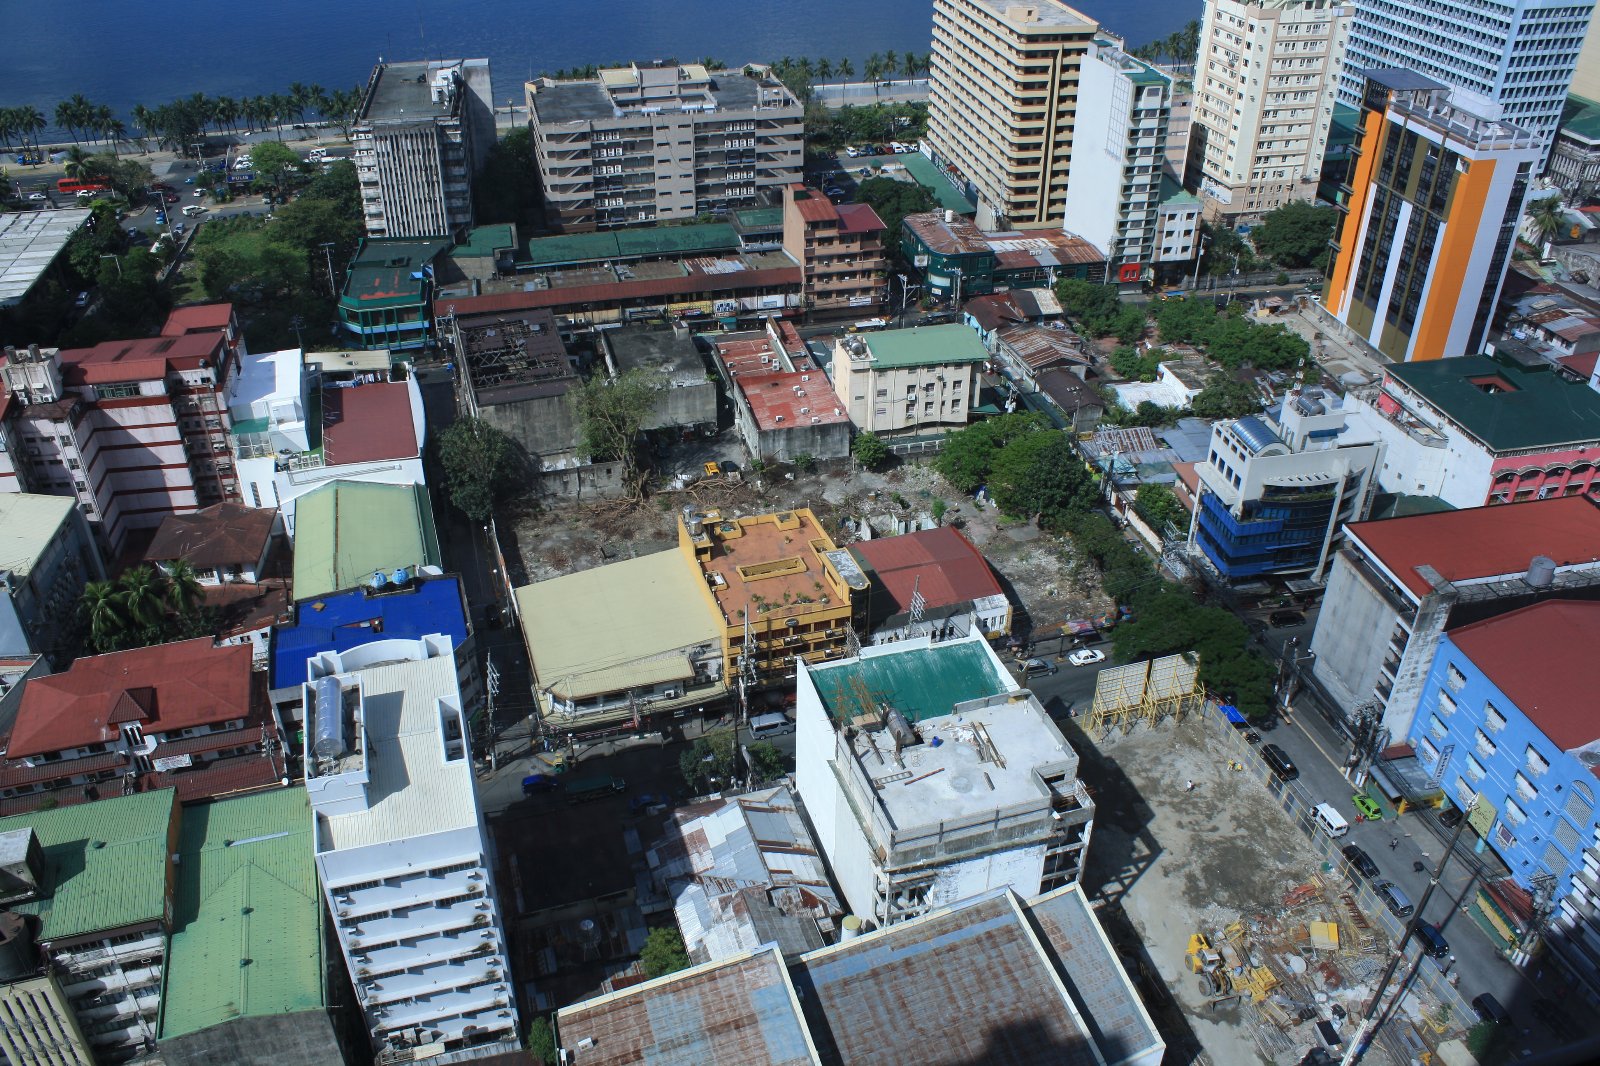 Ermita Manila - plots of land ripe for development